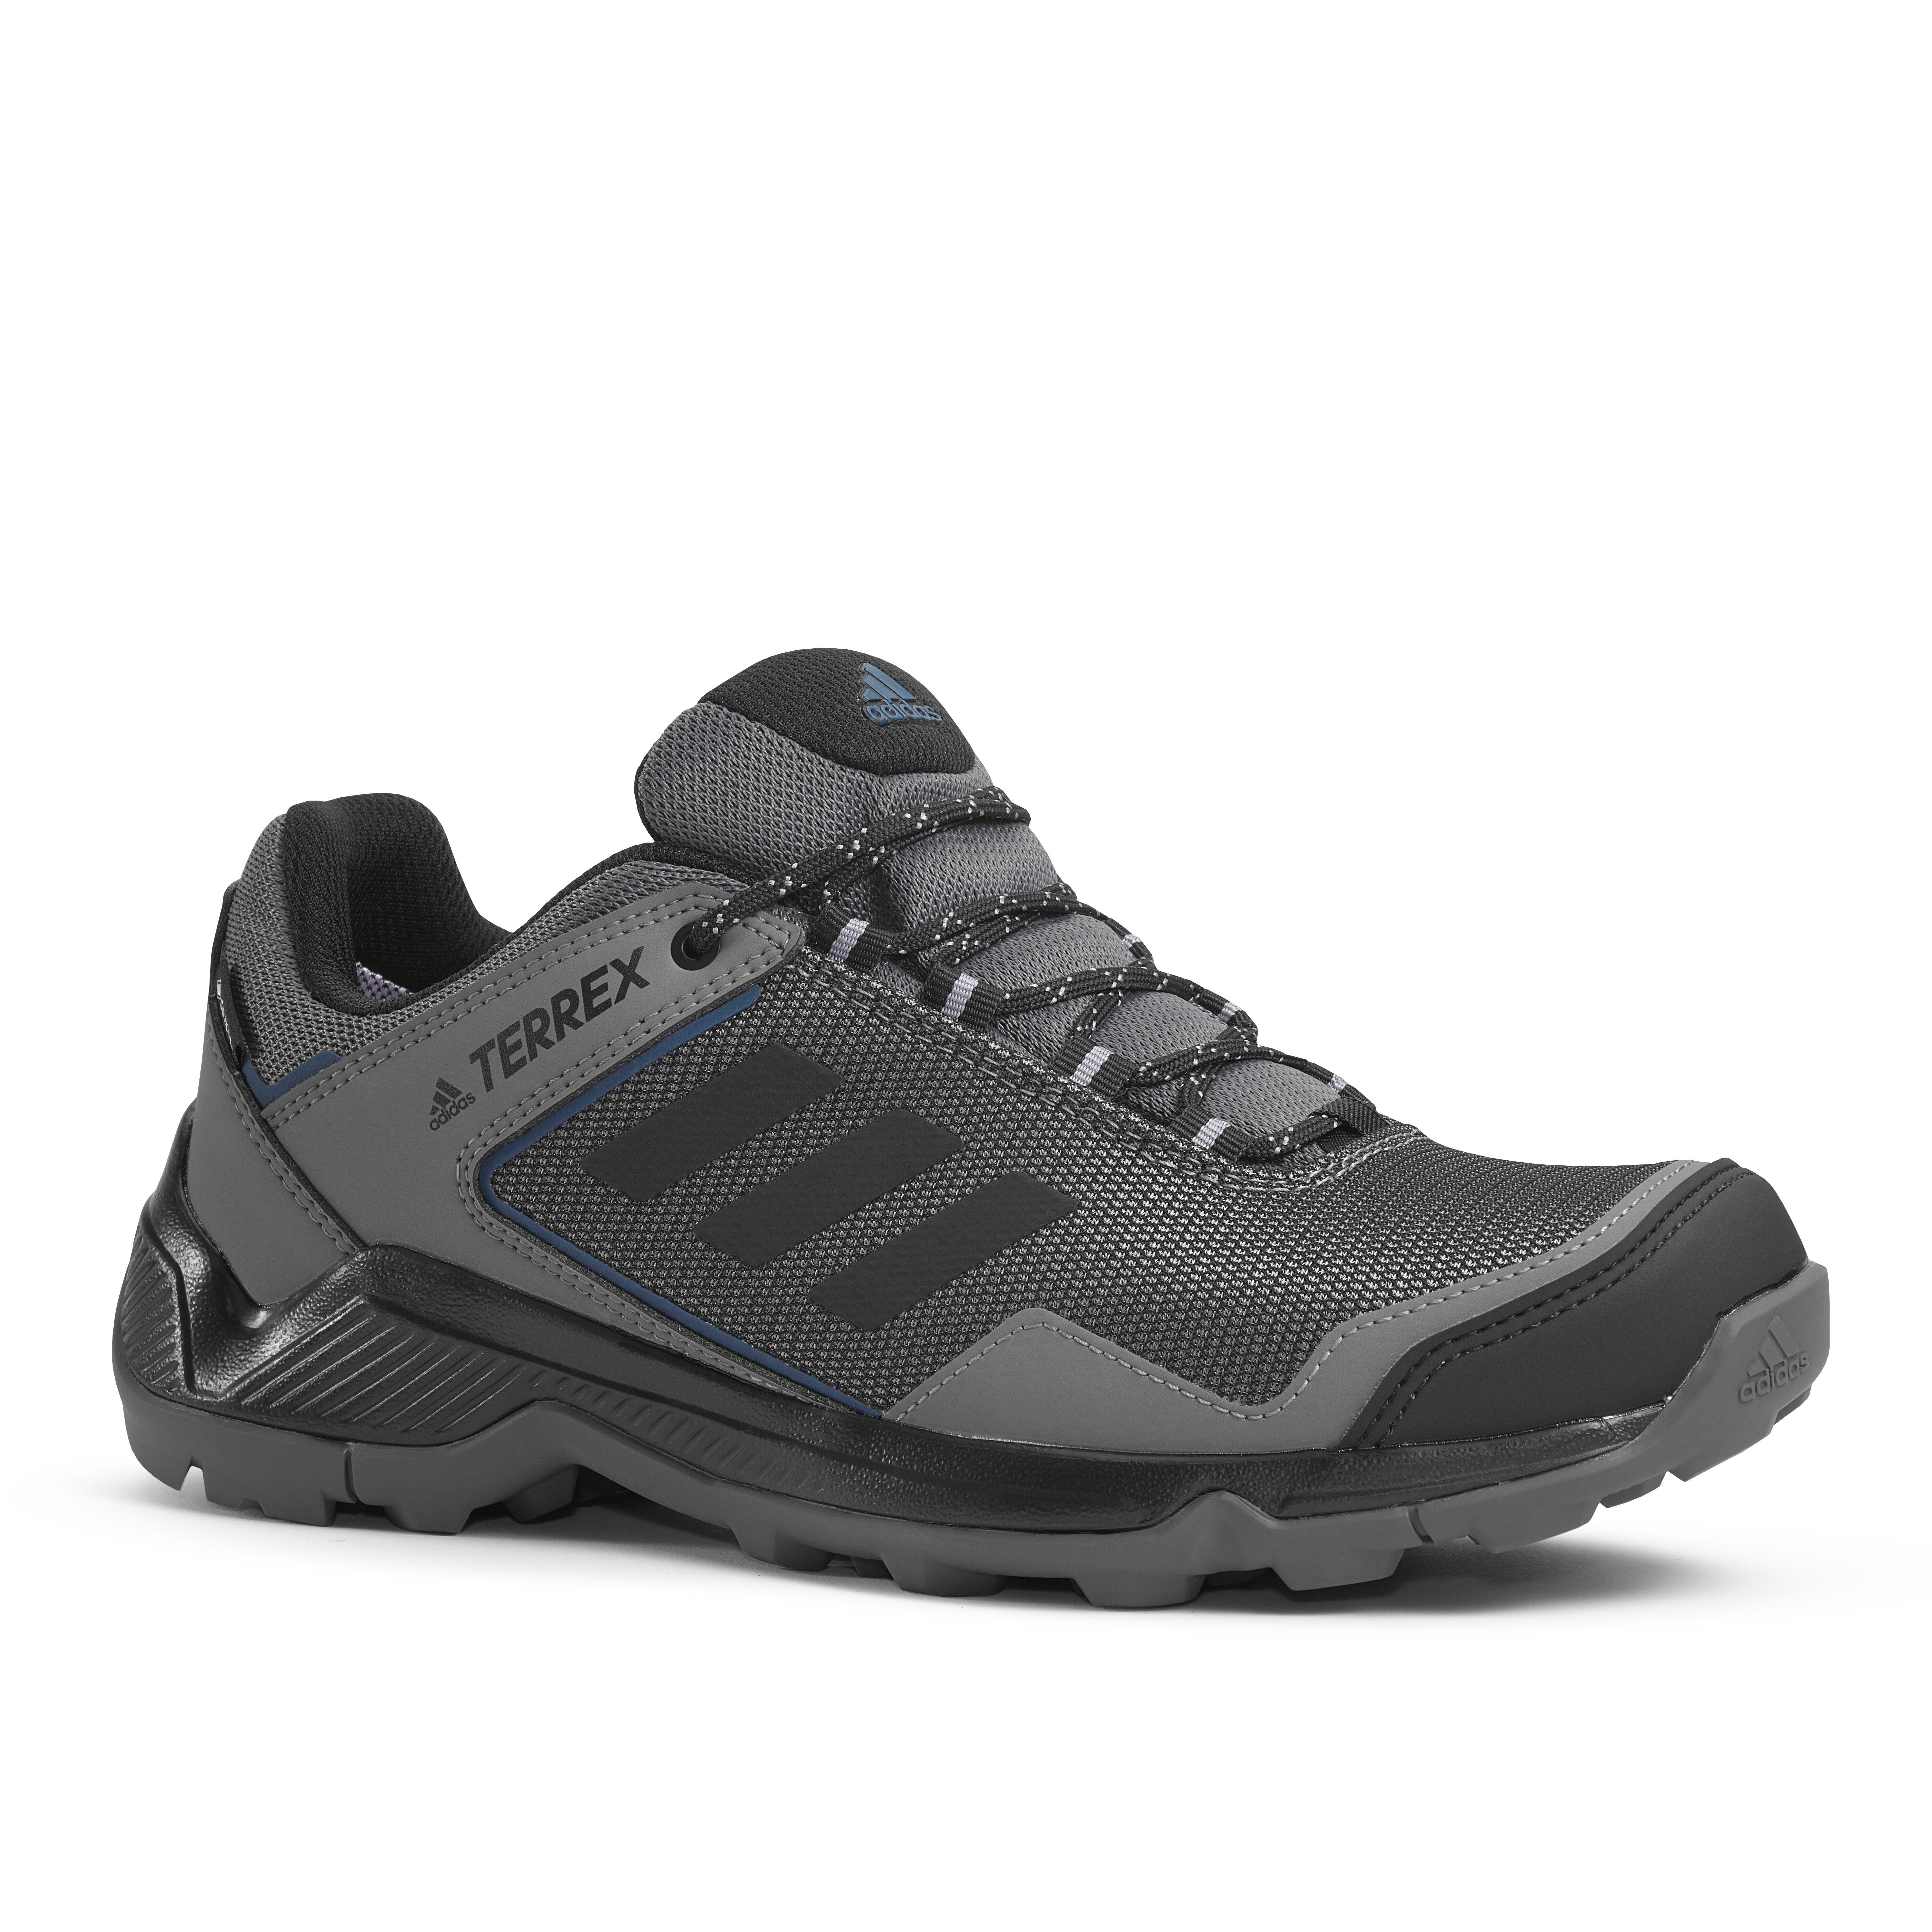 Men's waterproof walking shoes - Adidas Terrex Easttrail Gore-tex ... كوكاكولا قزاز